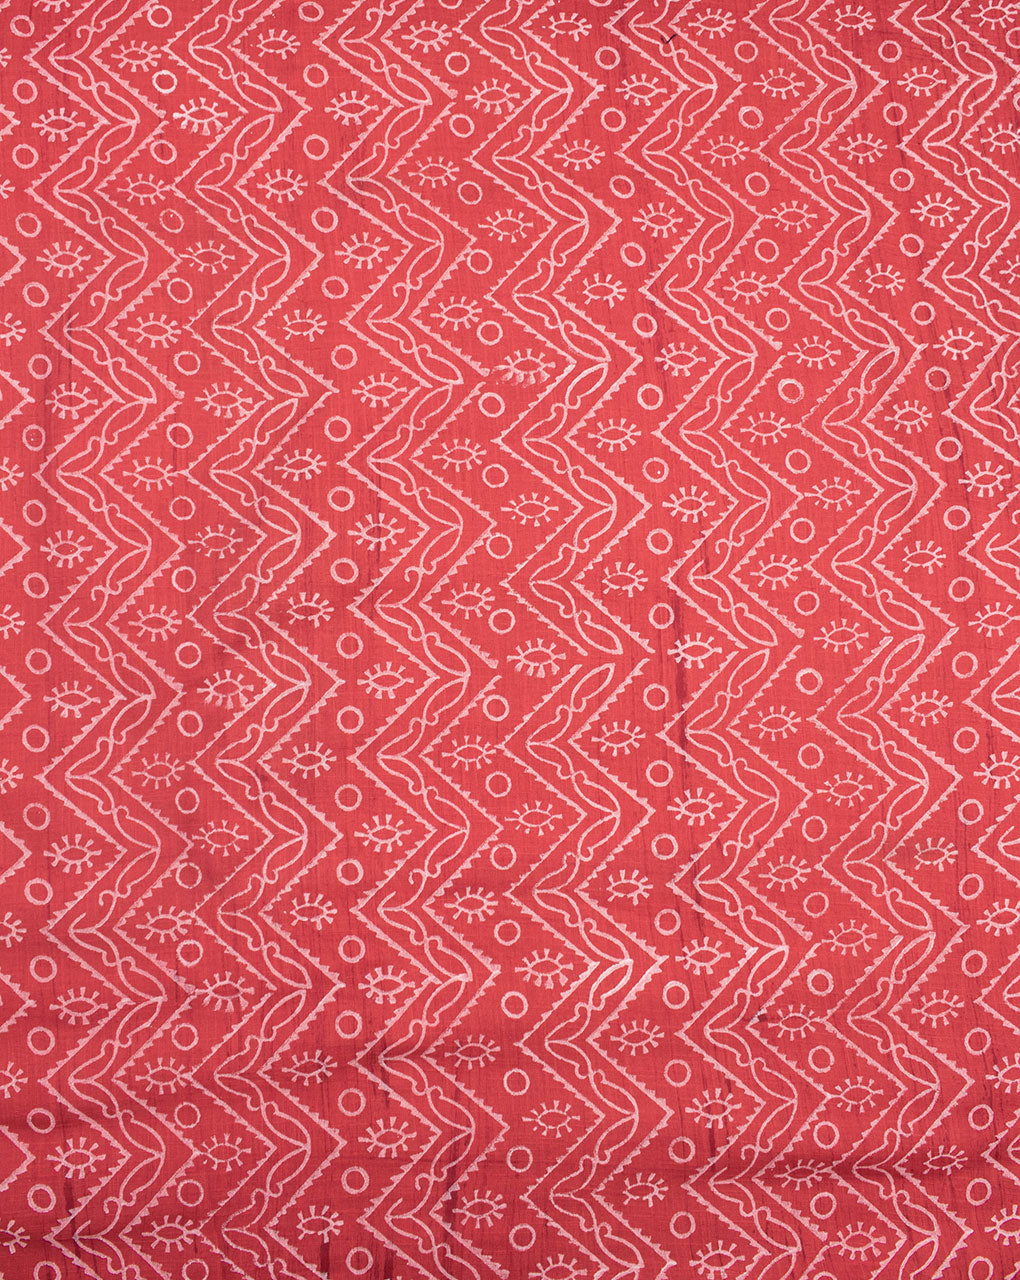 Khari Screen Print Slub Cotton Fabric - Fabriclore.com